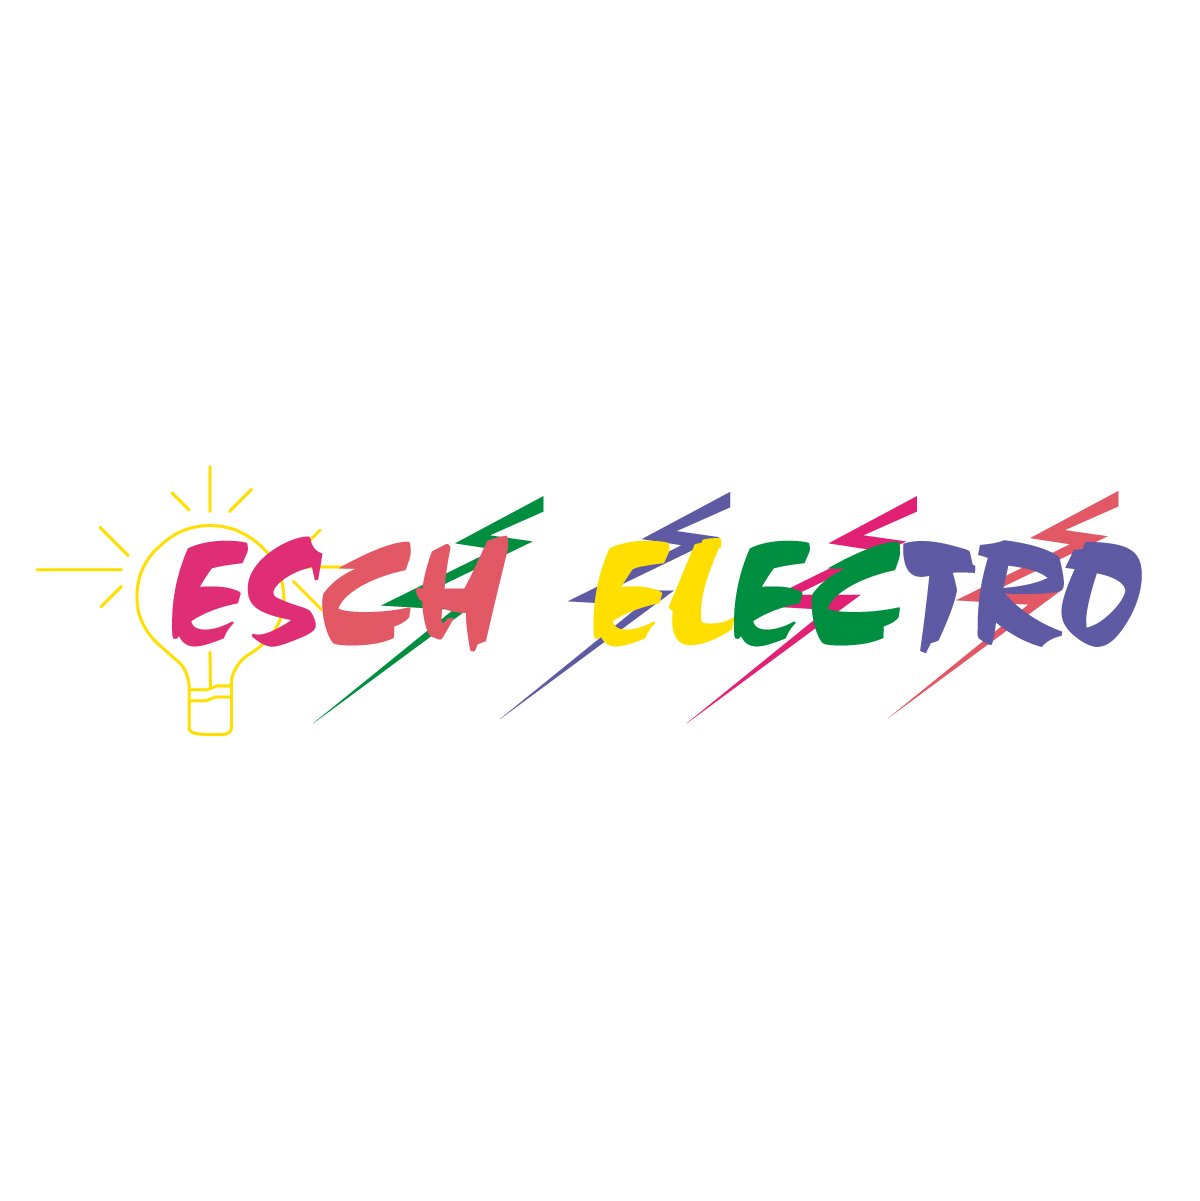 (c) Electricien-esch-electro.com